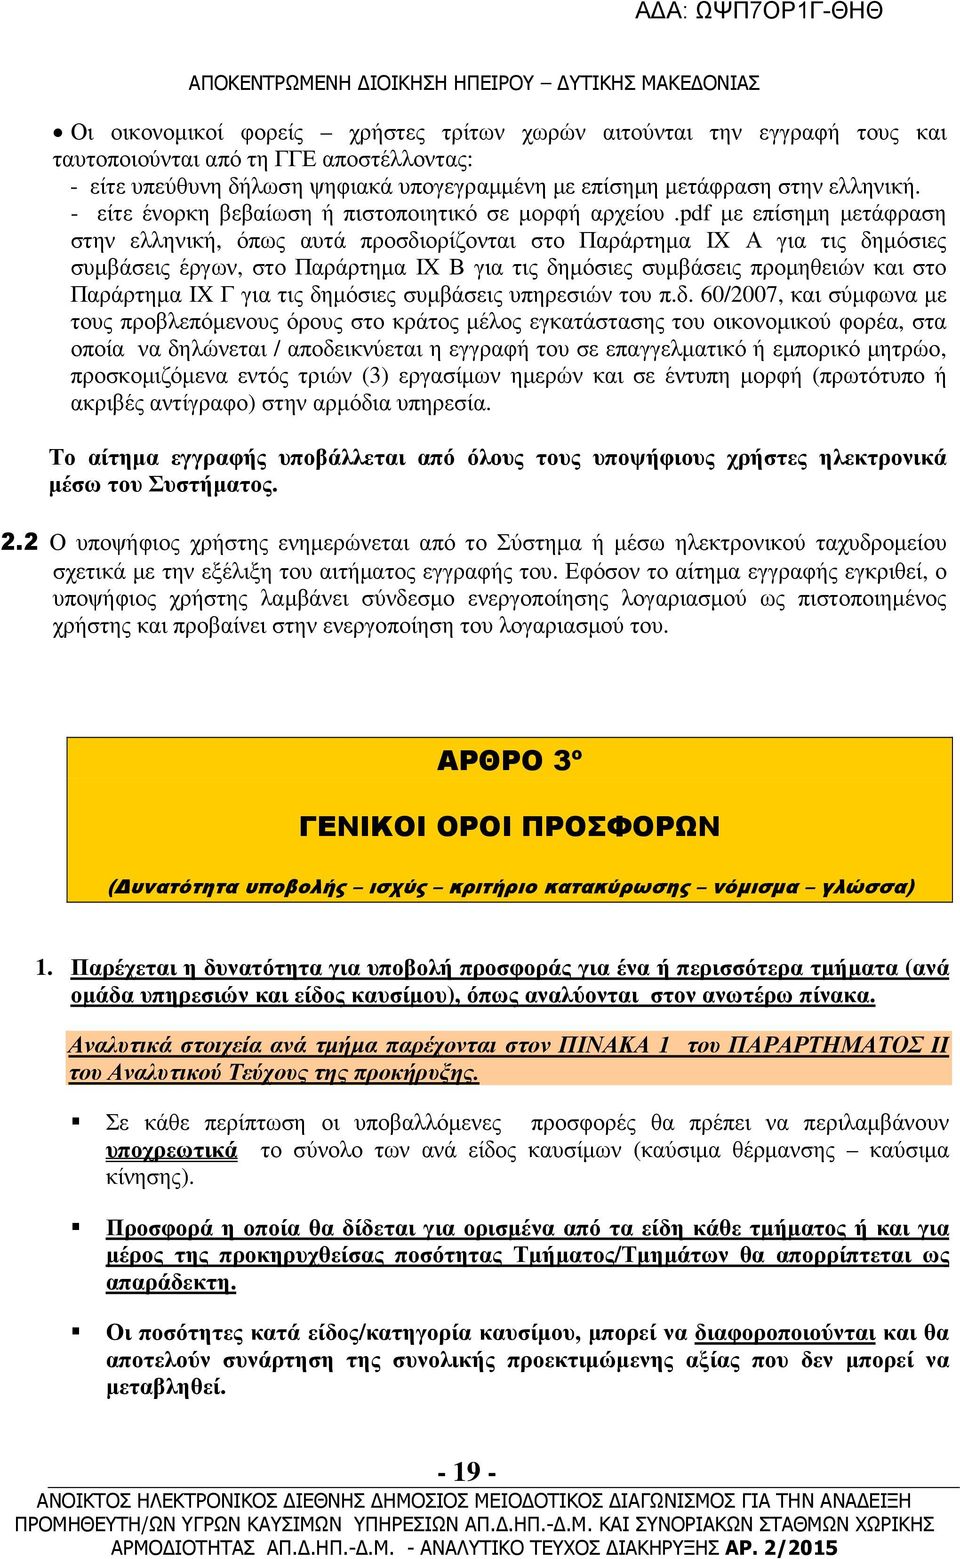 pdf µε επίσηµη µετάφραση στην ελληνική, όπως αυτά προσδιορίζονται στο Παράρτηµα IX Α για τις δηµόσιες συµβάσεις έργων, στο Παράρτηµα IX Β για τις δηµόσιες συµβάσεις προµηθειών και στο Παράρτηµα IX Γ